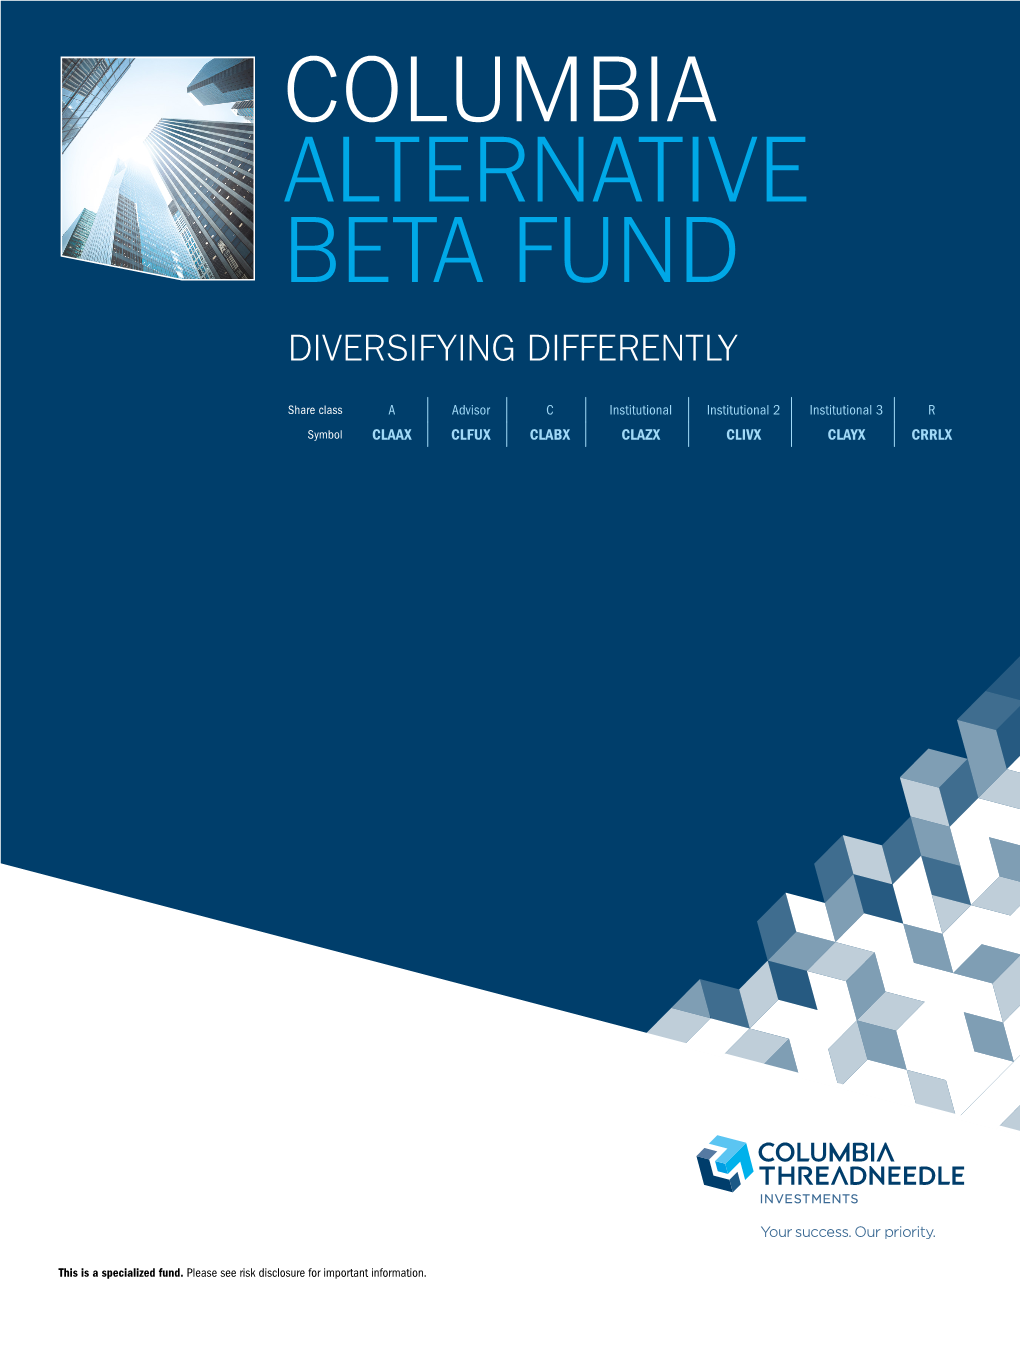 Columbia Alternative Beta Fund Diversifying Differently